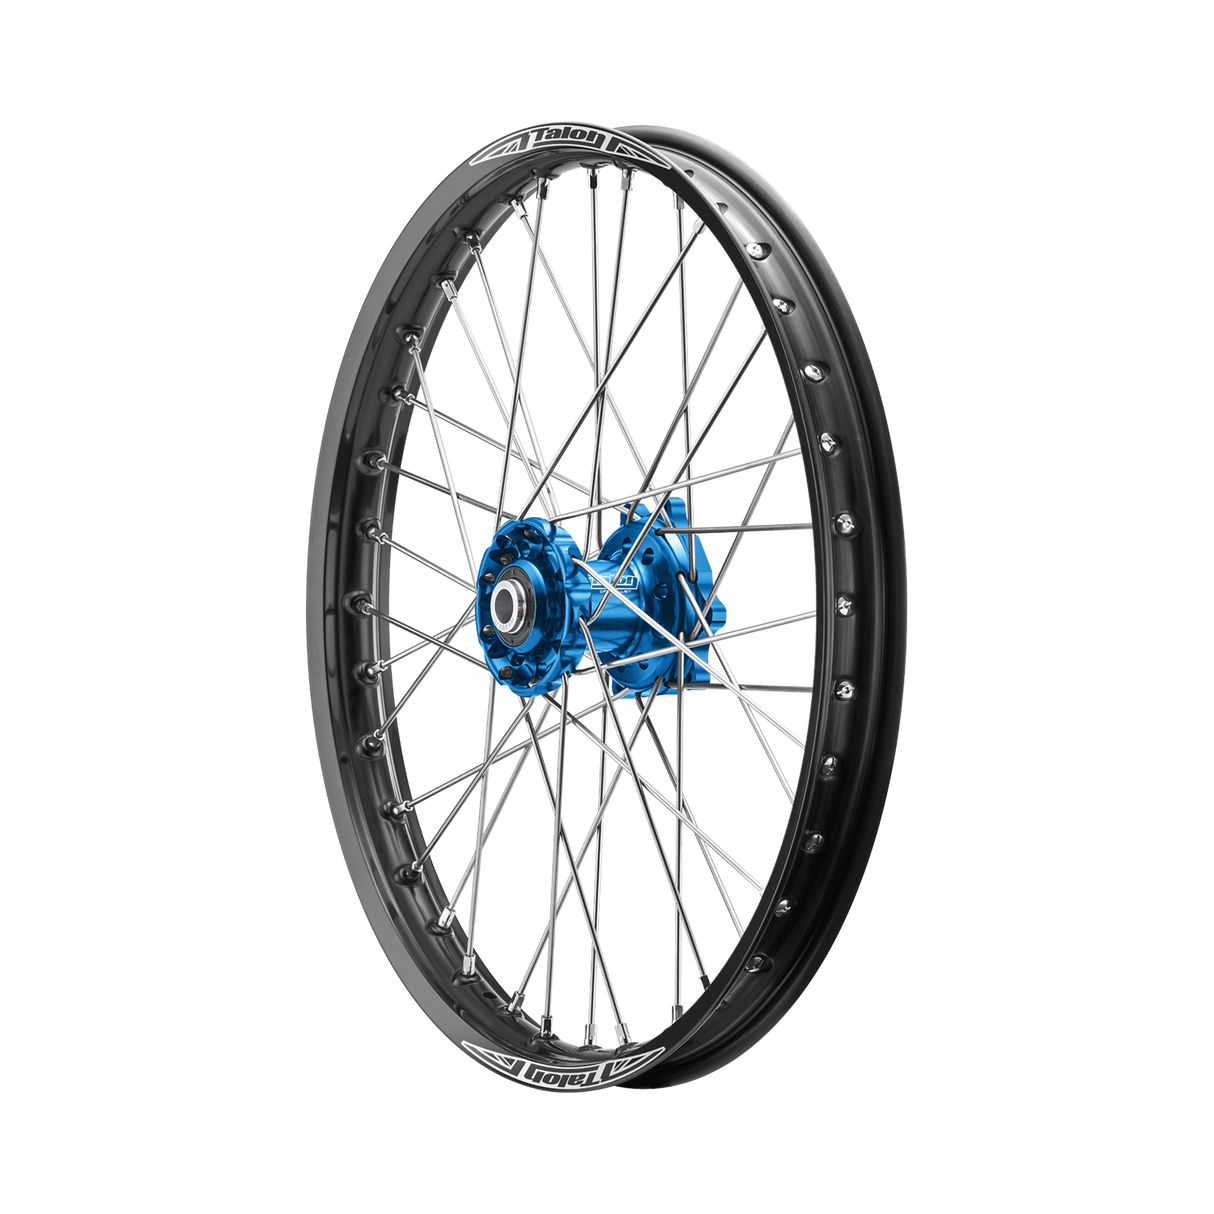 Talon 50cc Big Wheel Front Wheel Black Rim - Blue Hubs